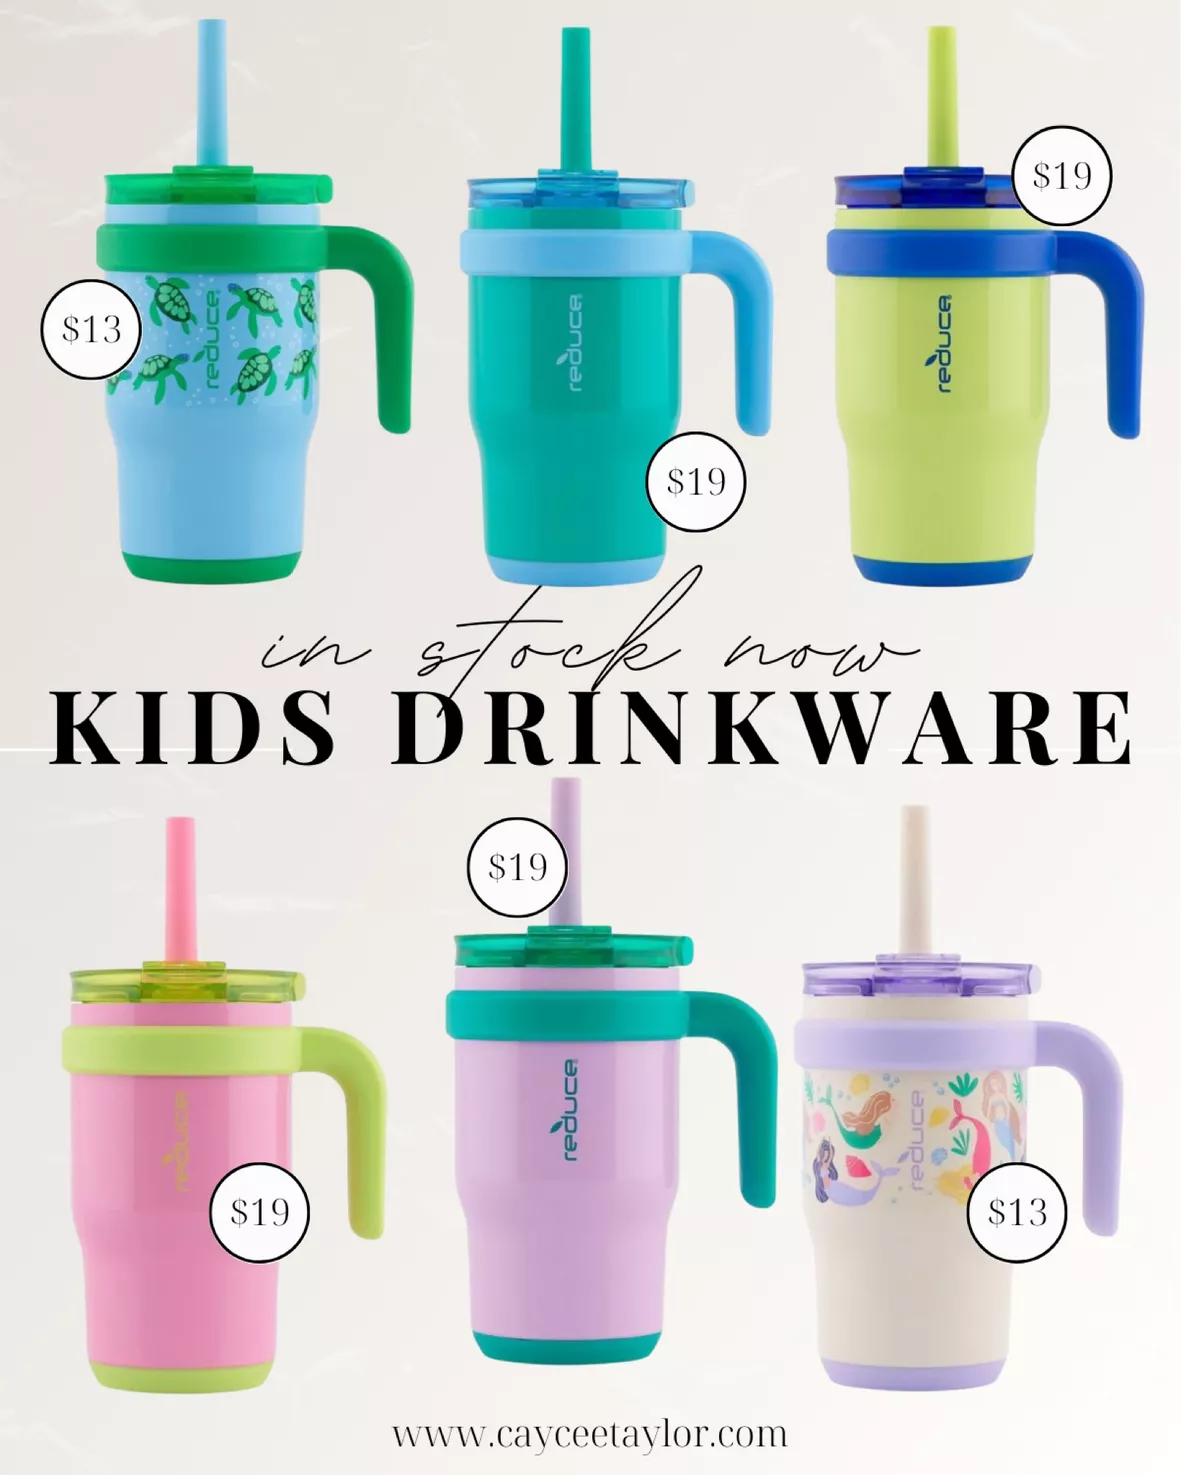 Reduce Coldee Portable Drinkware 14oz Mug : Target